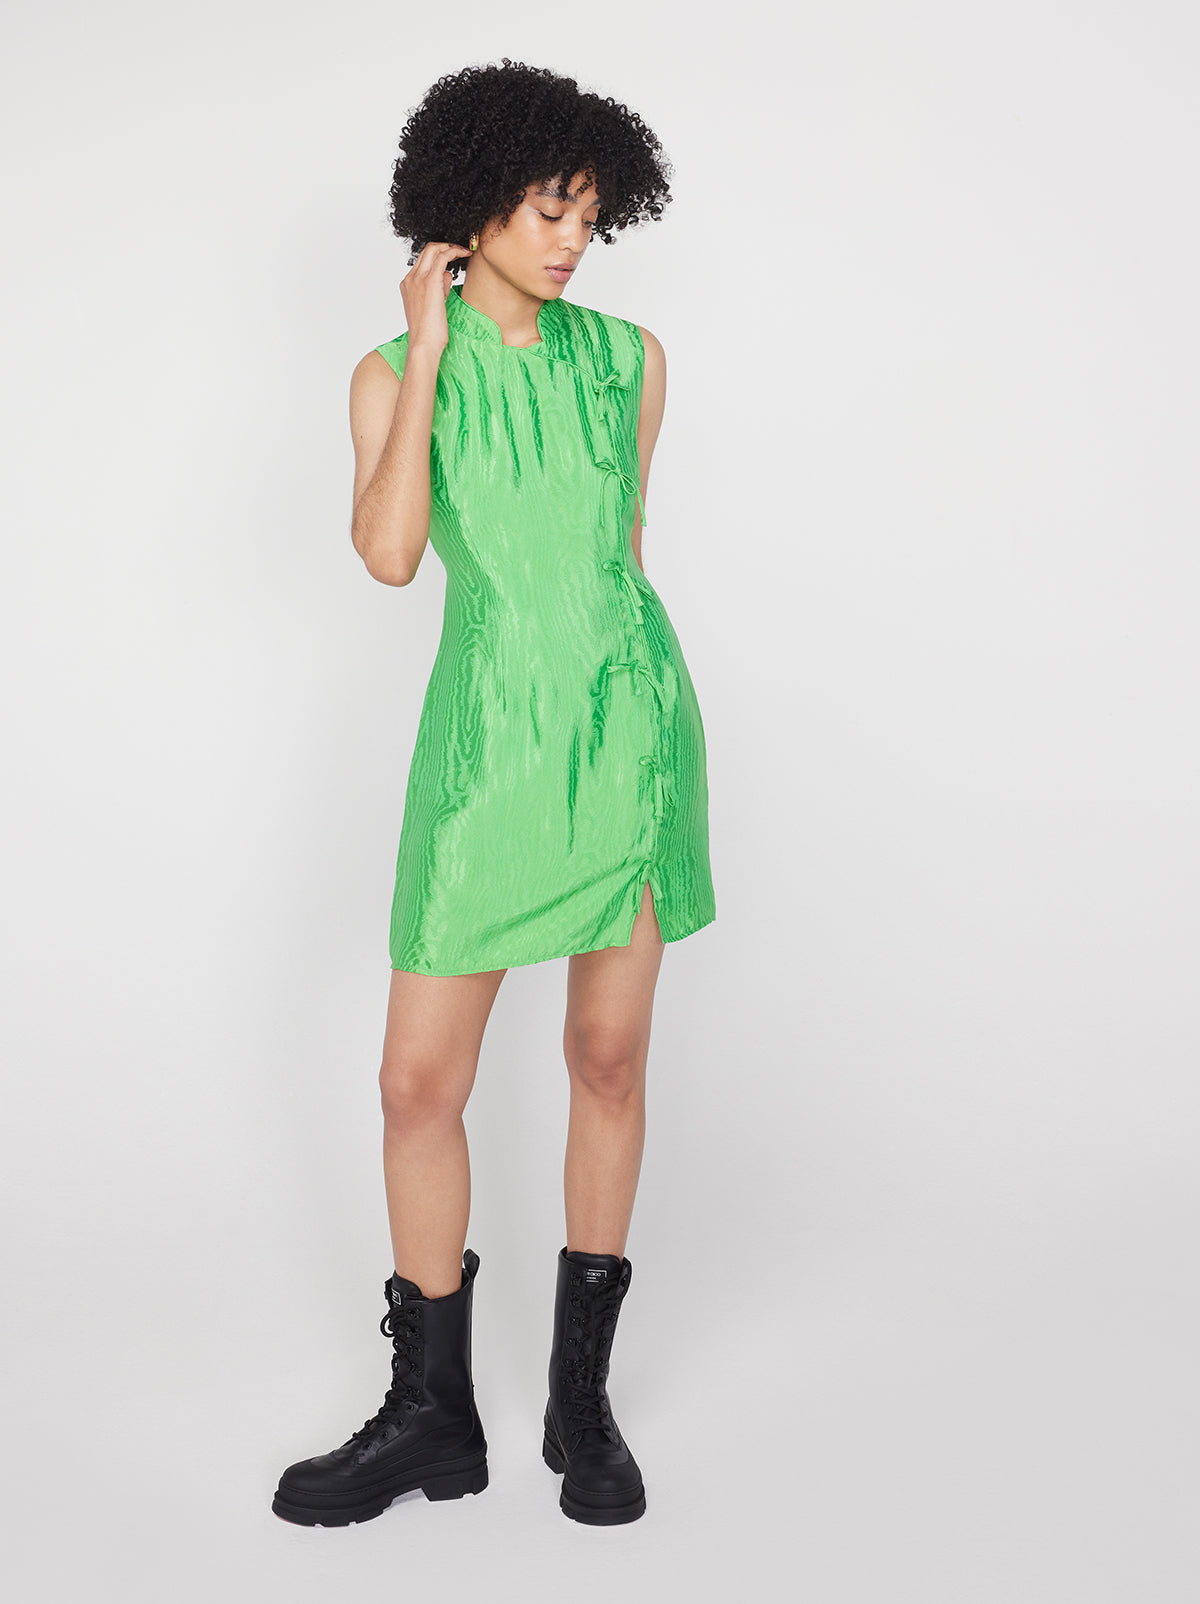 Aubrey Lime Green Mini Dress By KITRI Studio